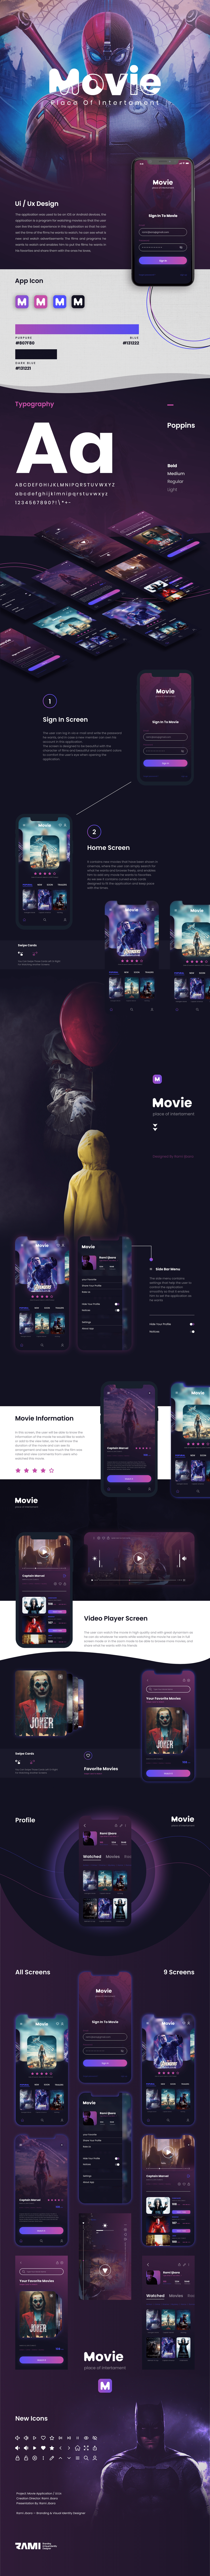 app design concept movie app UX design app digital identity marvel SuperHero UI user interface